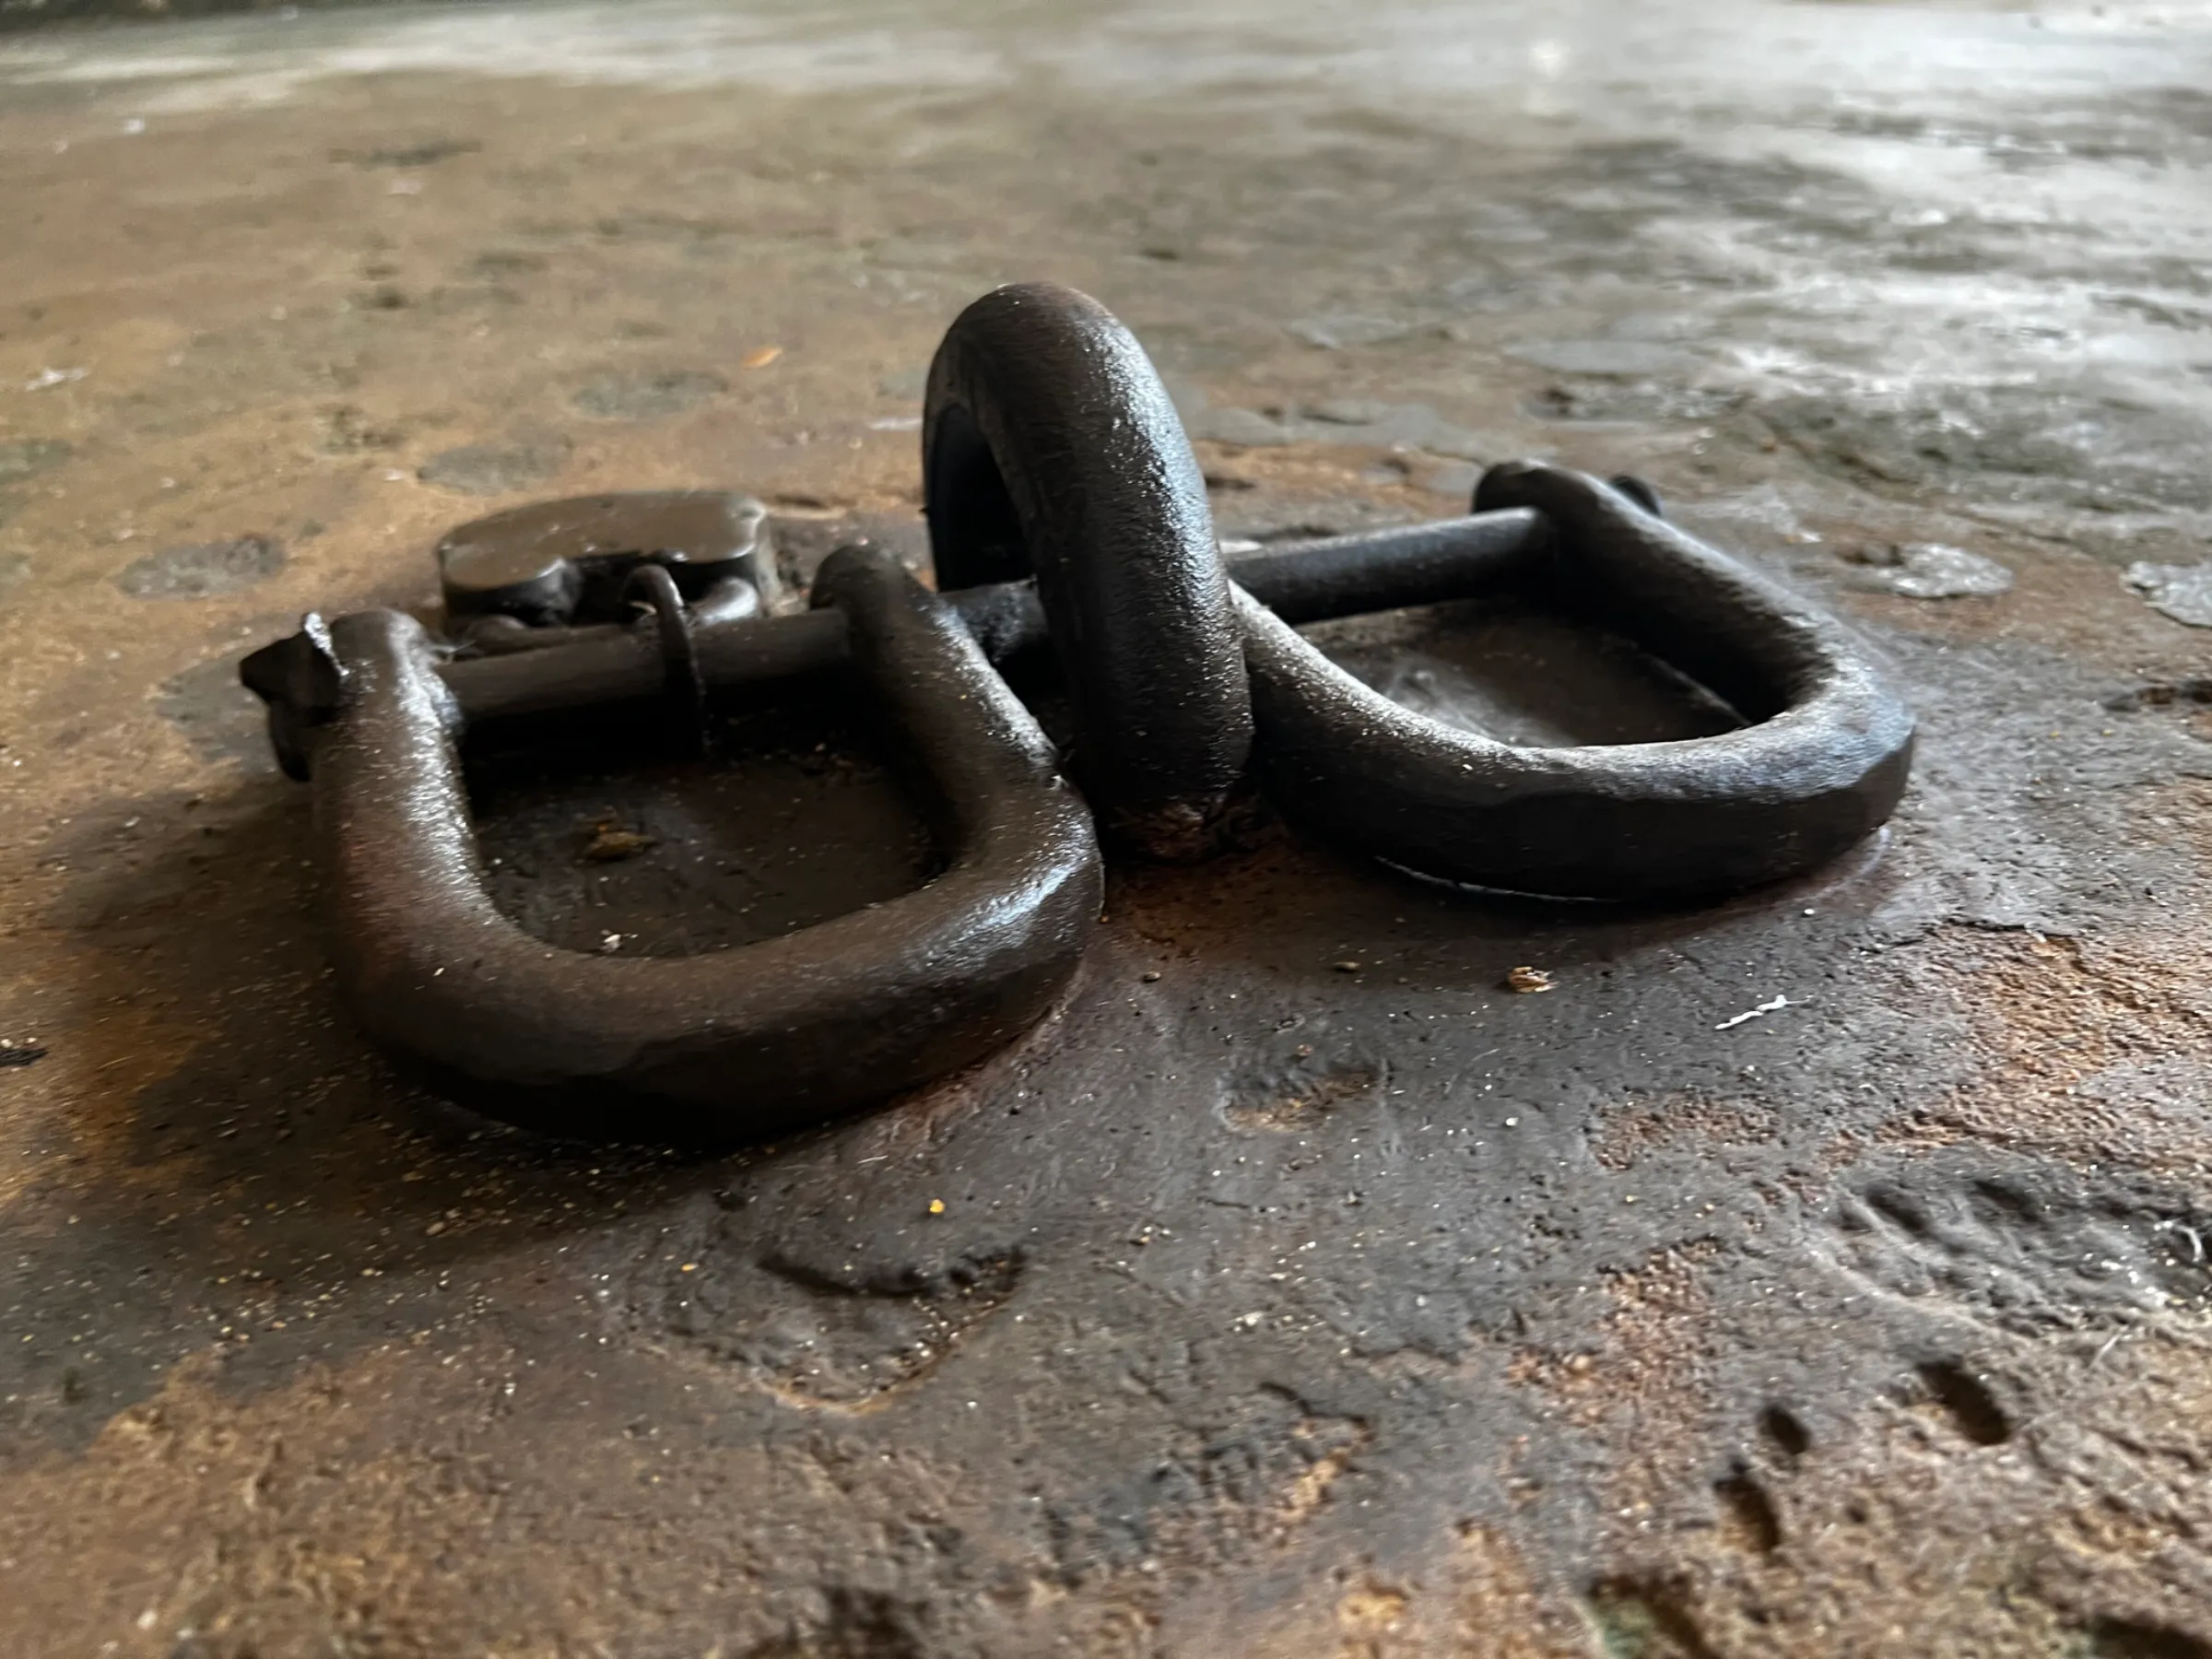 Ankle shackles used during the transatlantic slave trade at Fort Prinzenstein in Keta, Ghana on Aug 8, 2022